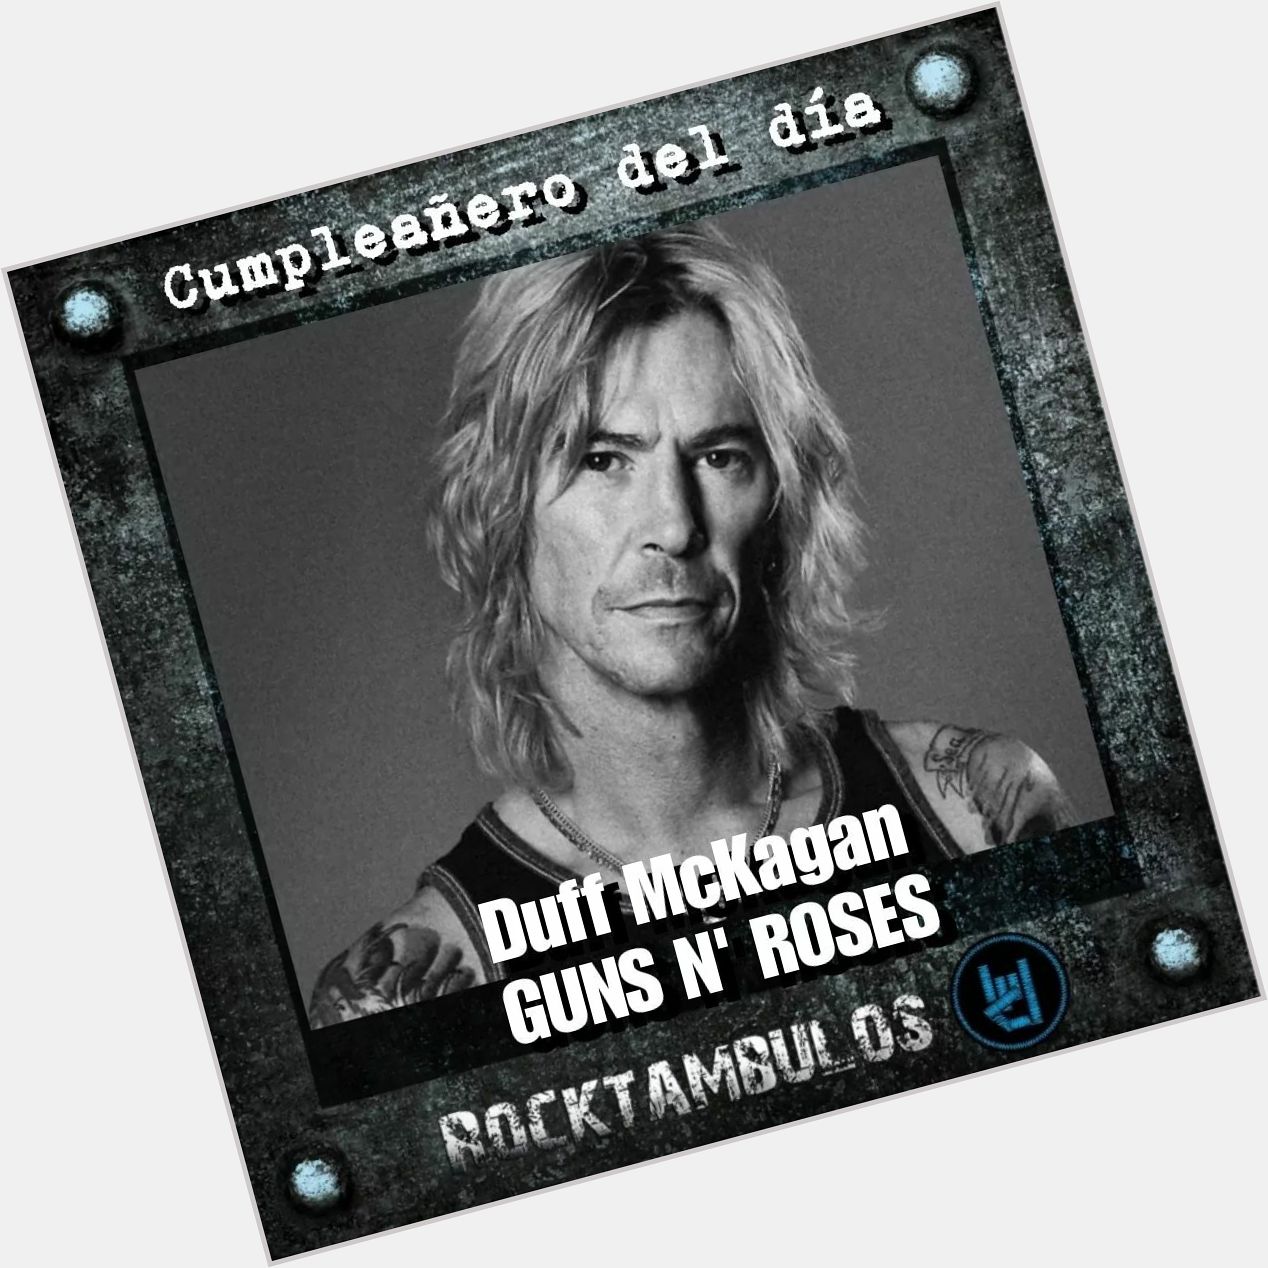 Hoy le cantamos cumpleaños al gran Duff McKagan, de Guns N Roses Happy birthday Duff 